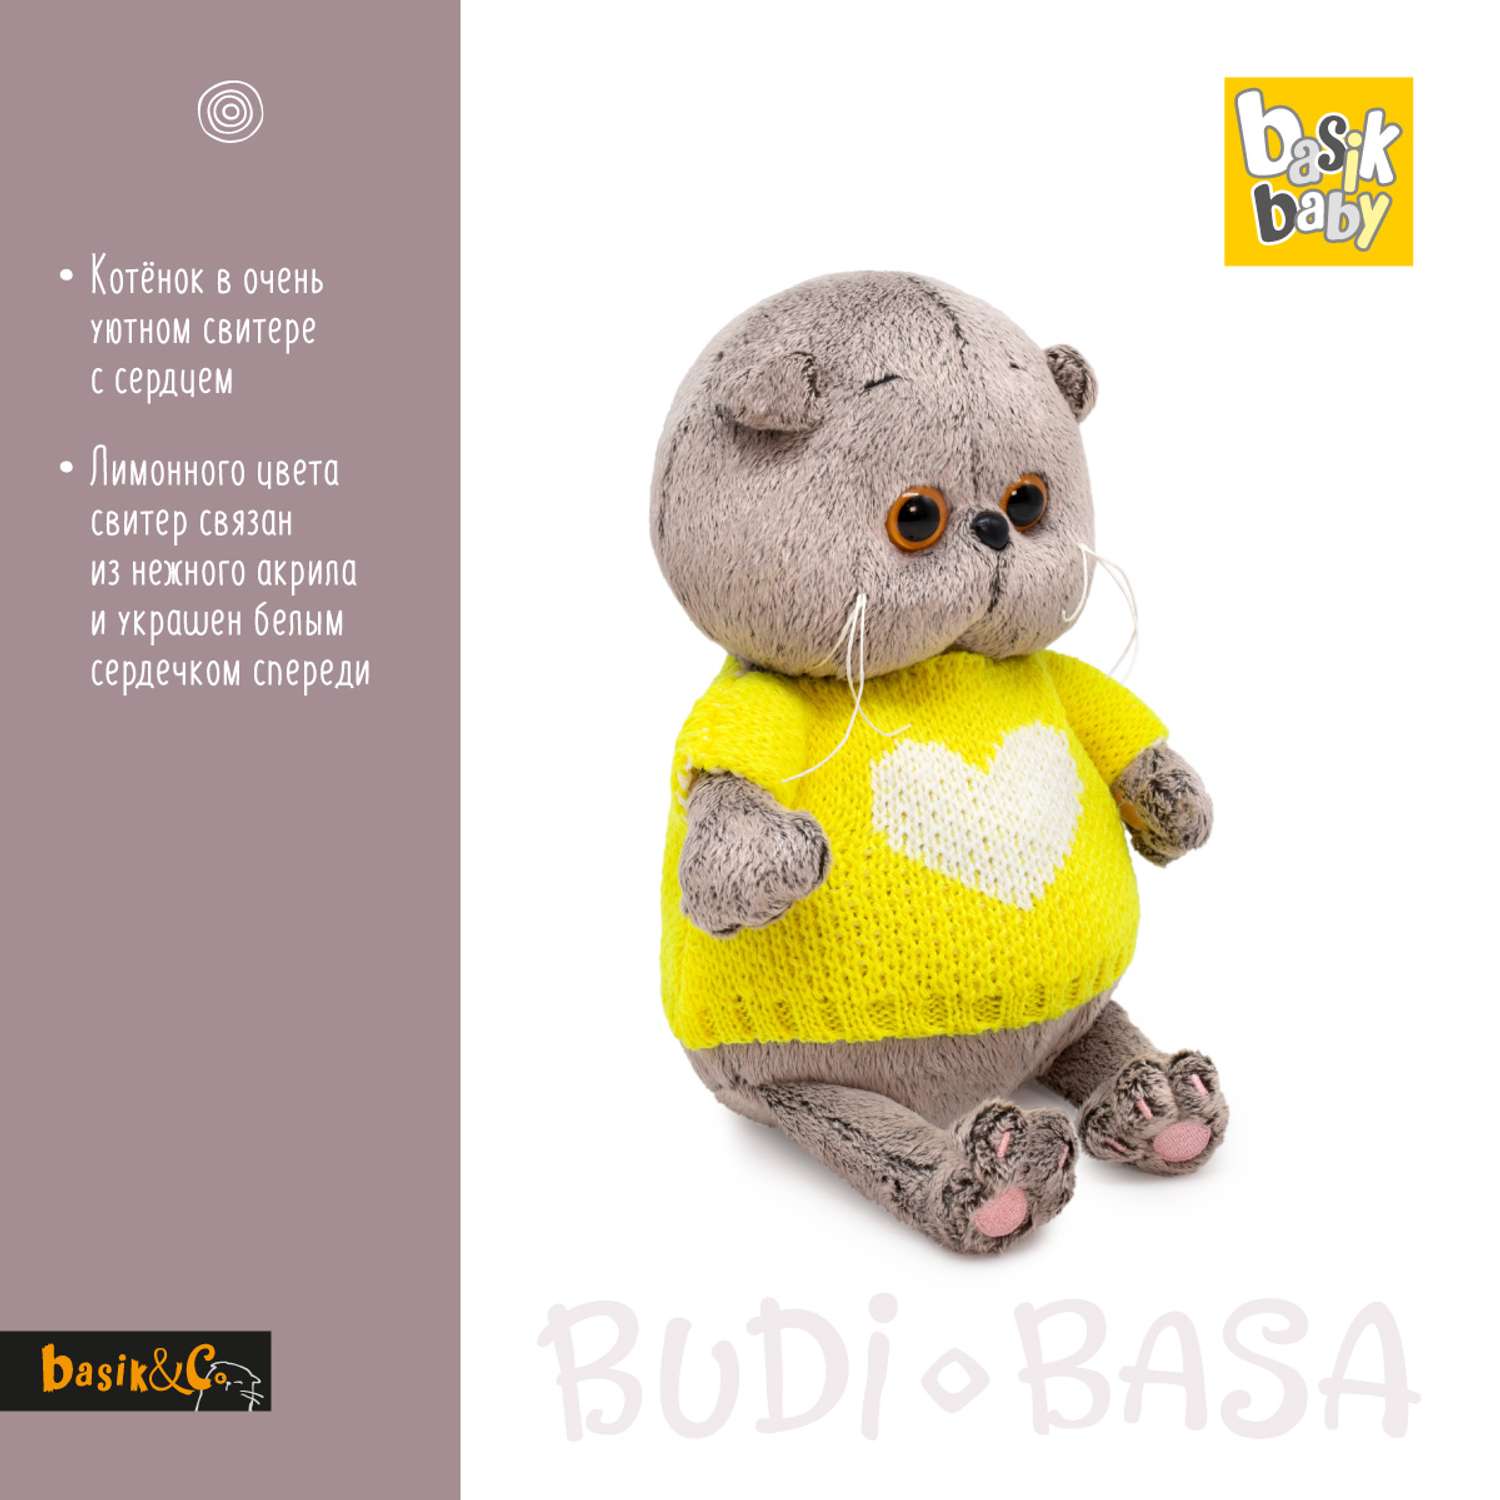 Мягкая игрушка BUDI BASA Басик BABY в свитере с сердцем 20 см BB-133 - фото 2